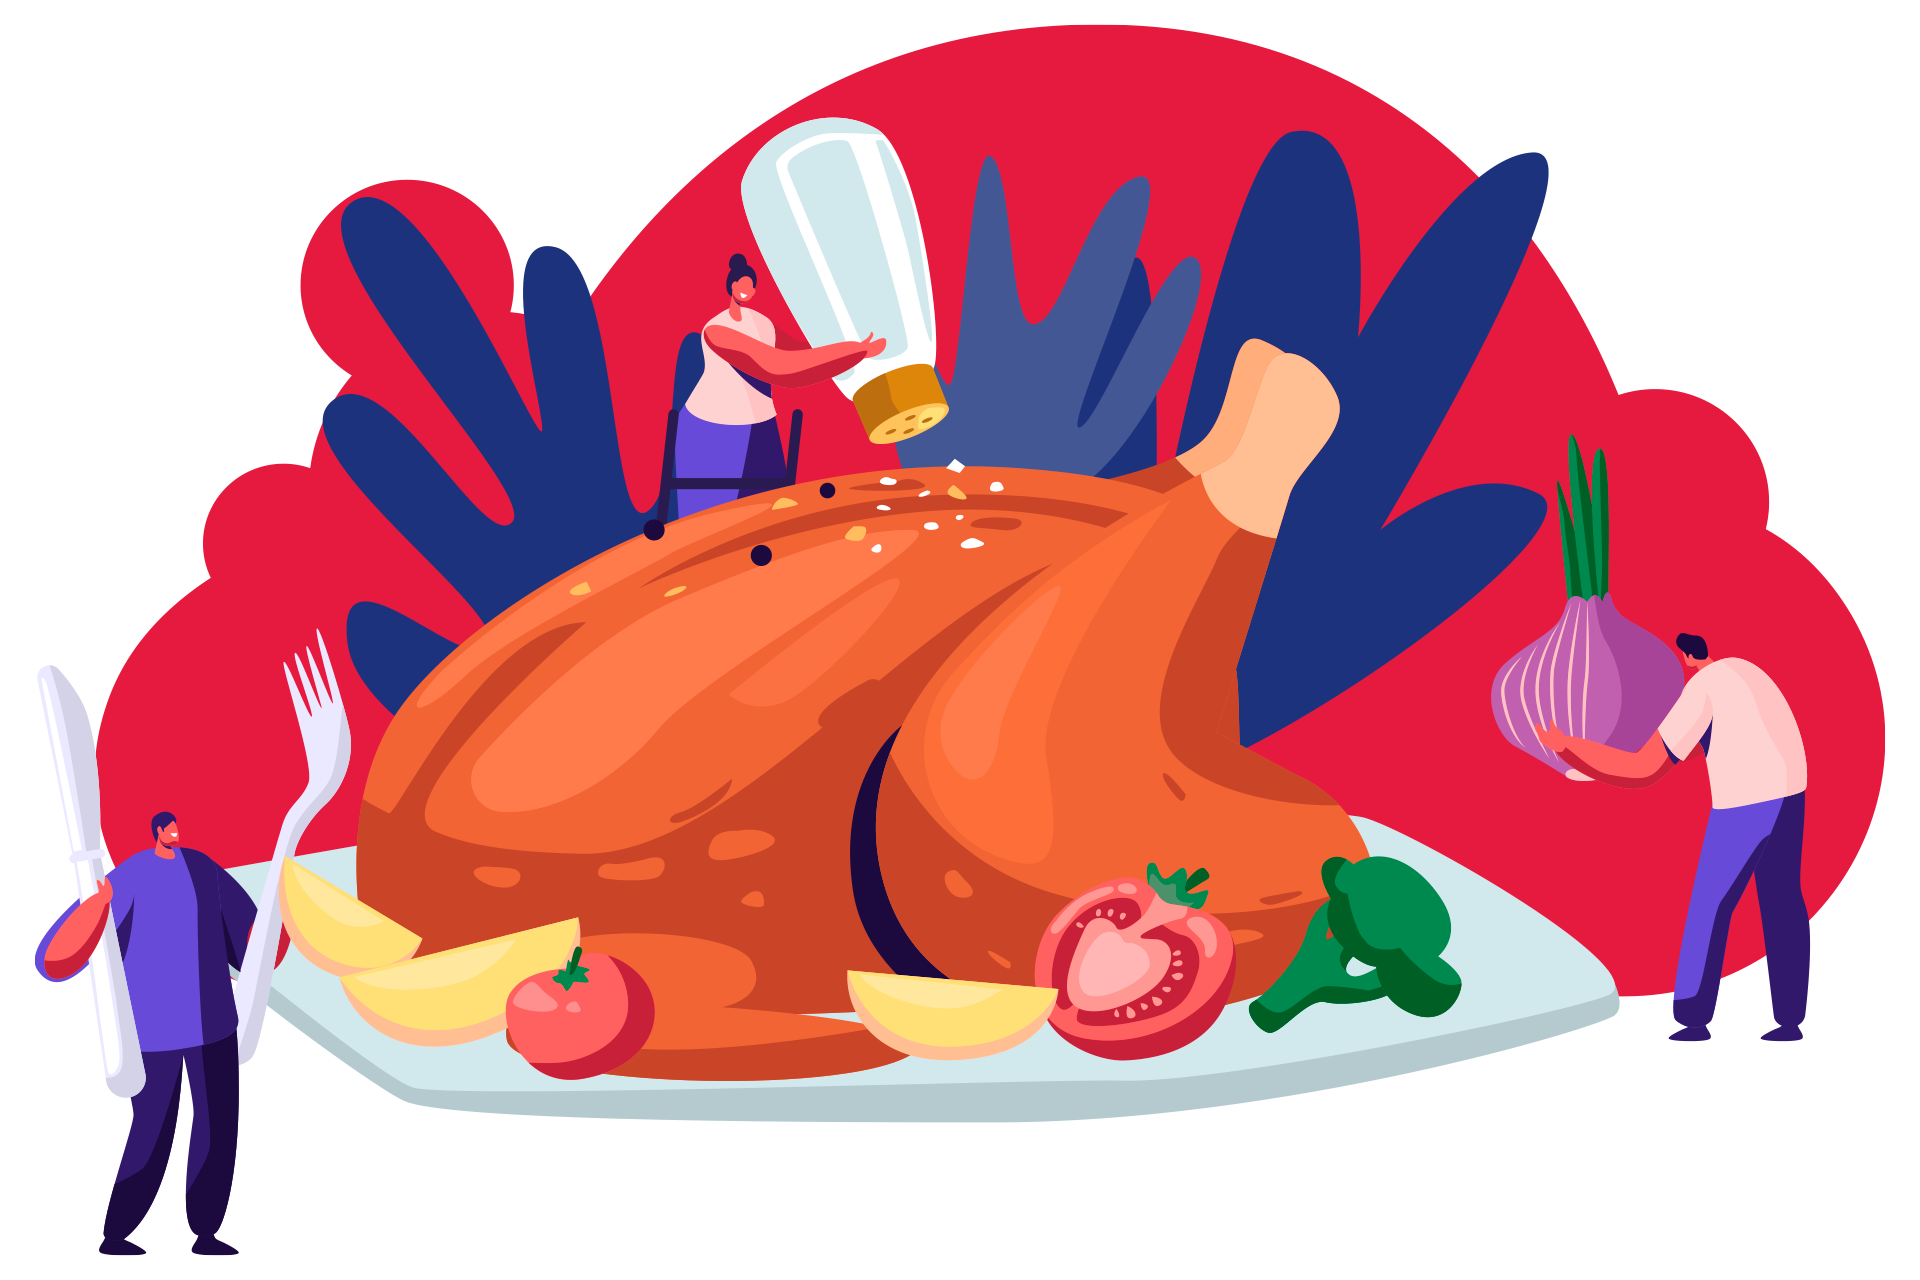 Thanksgiving graphic